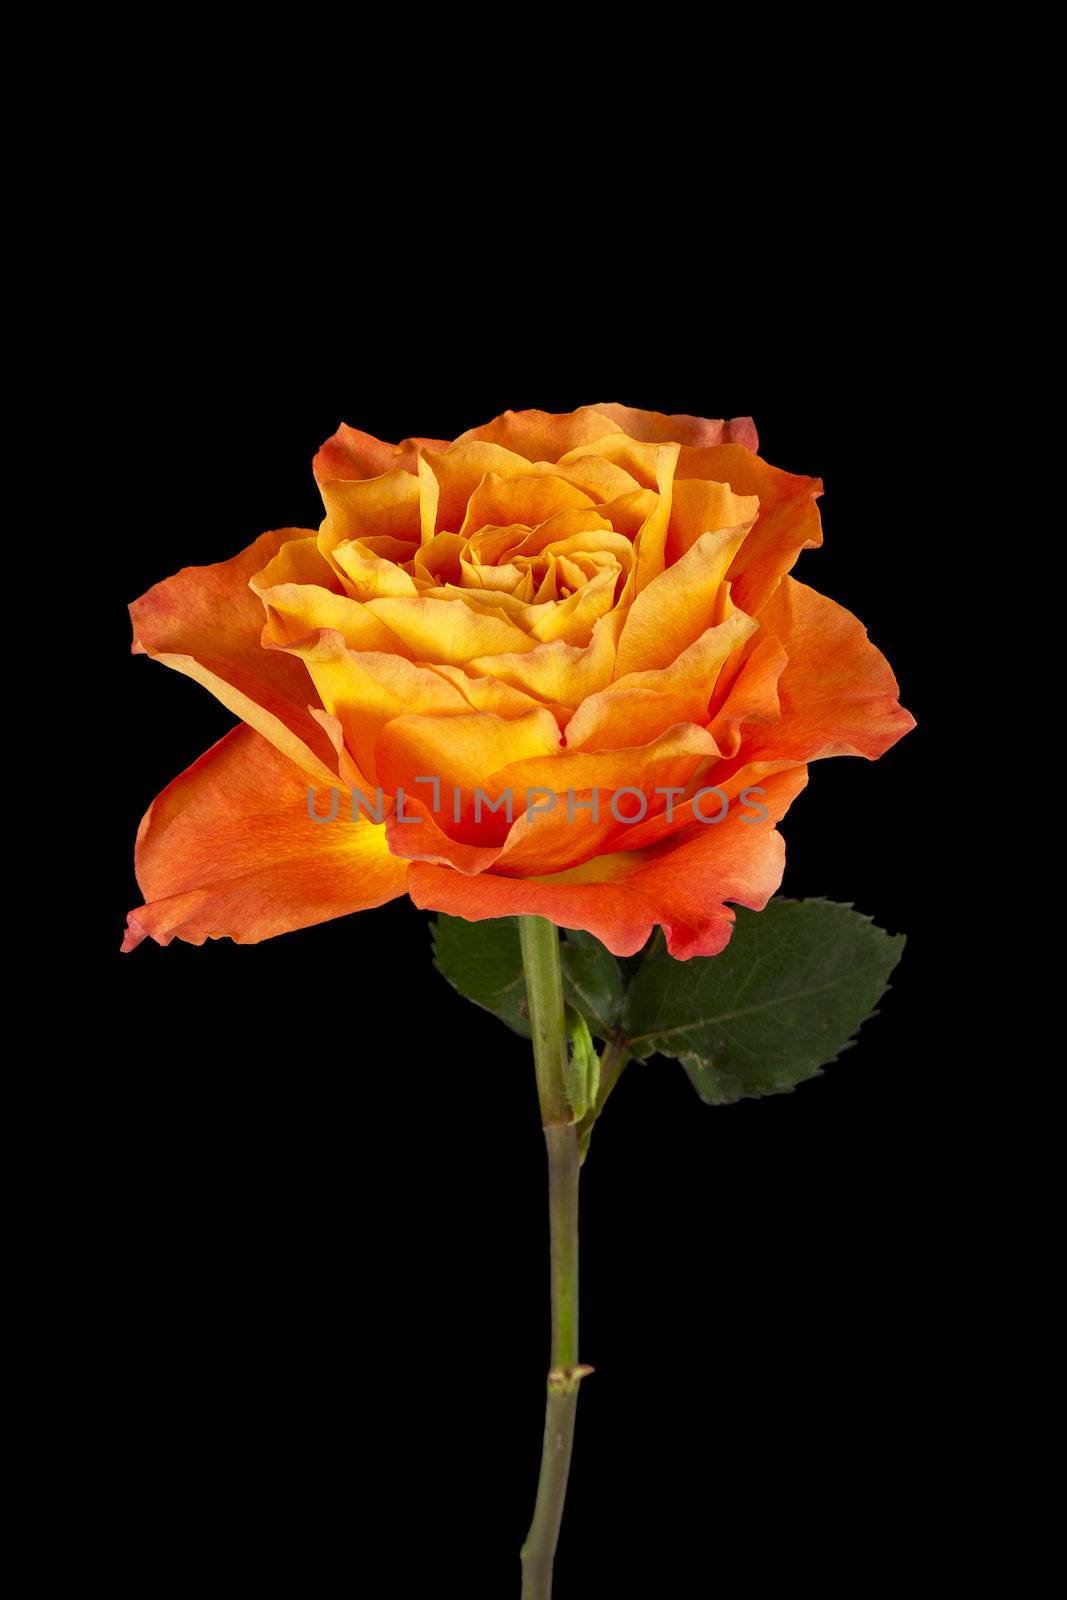 Image of orange rose flower on dark background